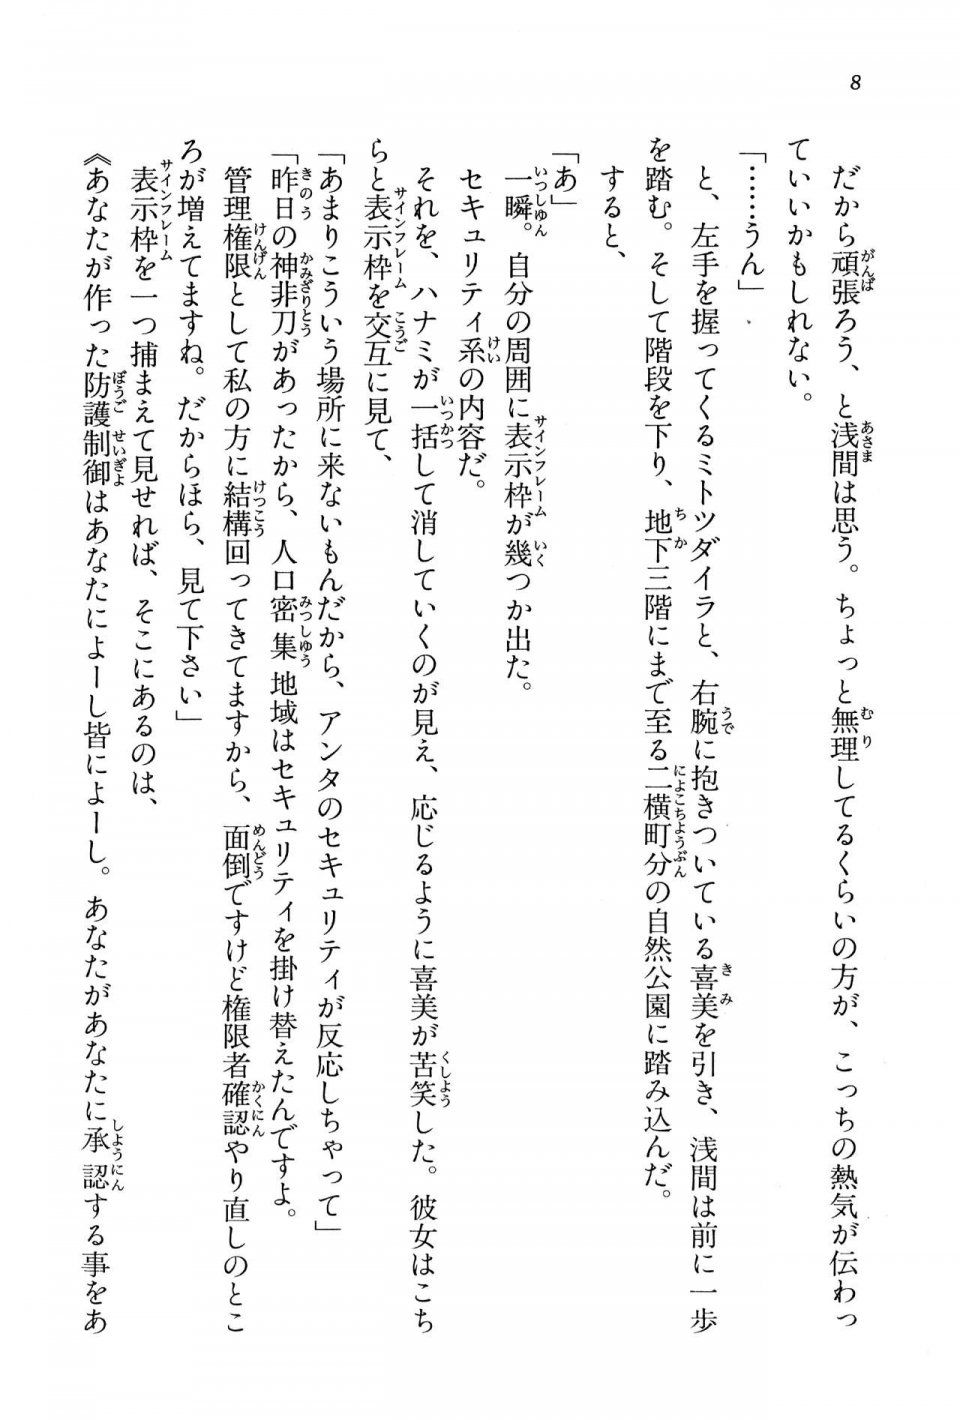 Kyoukai Senjou no Horizon BD Special Mininovel Vol 3(2A) - Photo #12